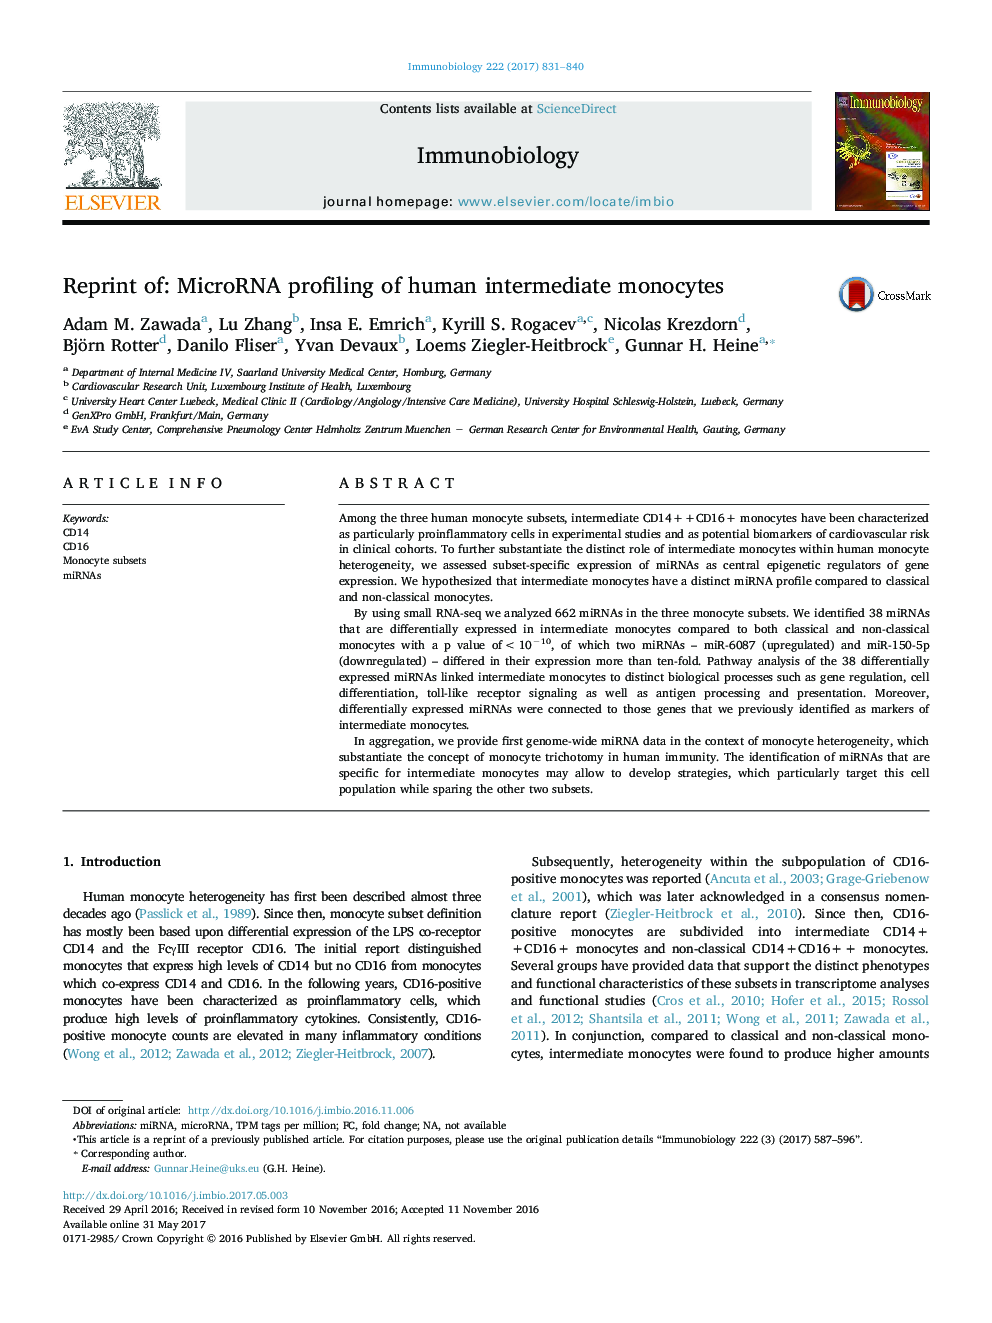 Reprint of: MicroRNA profiling of human intermediate monocytes